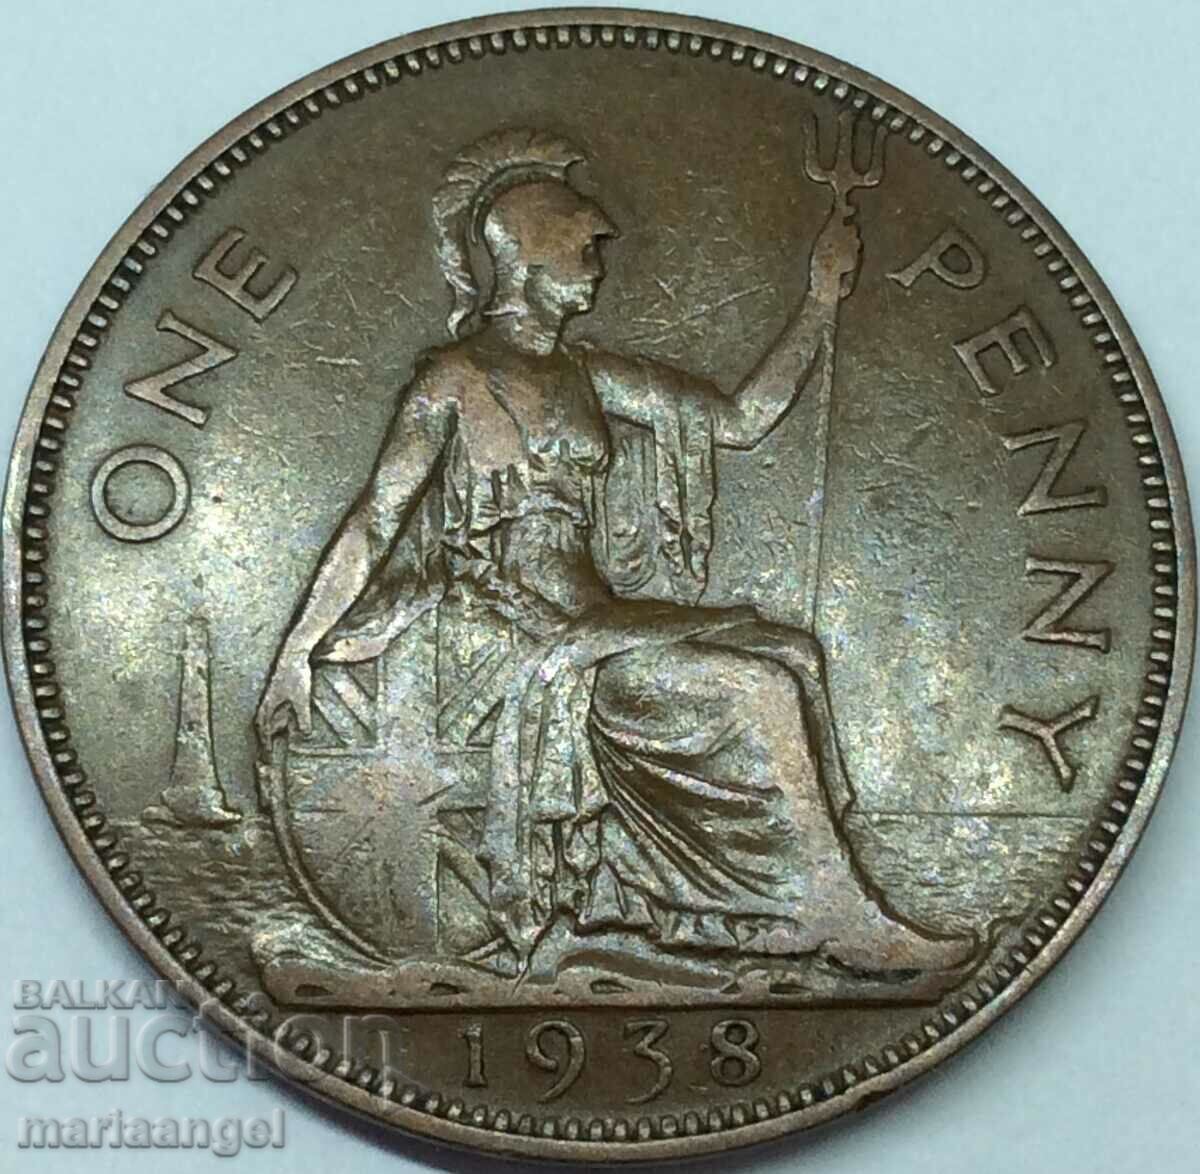 Великобритания 1 пени 1938 Джордж II бронз